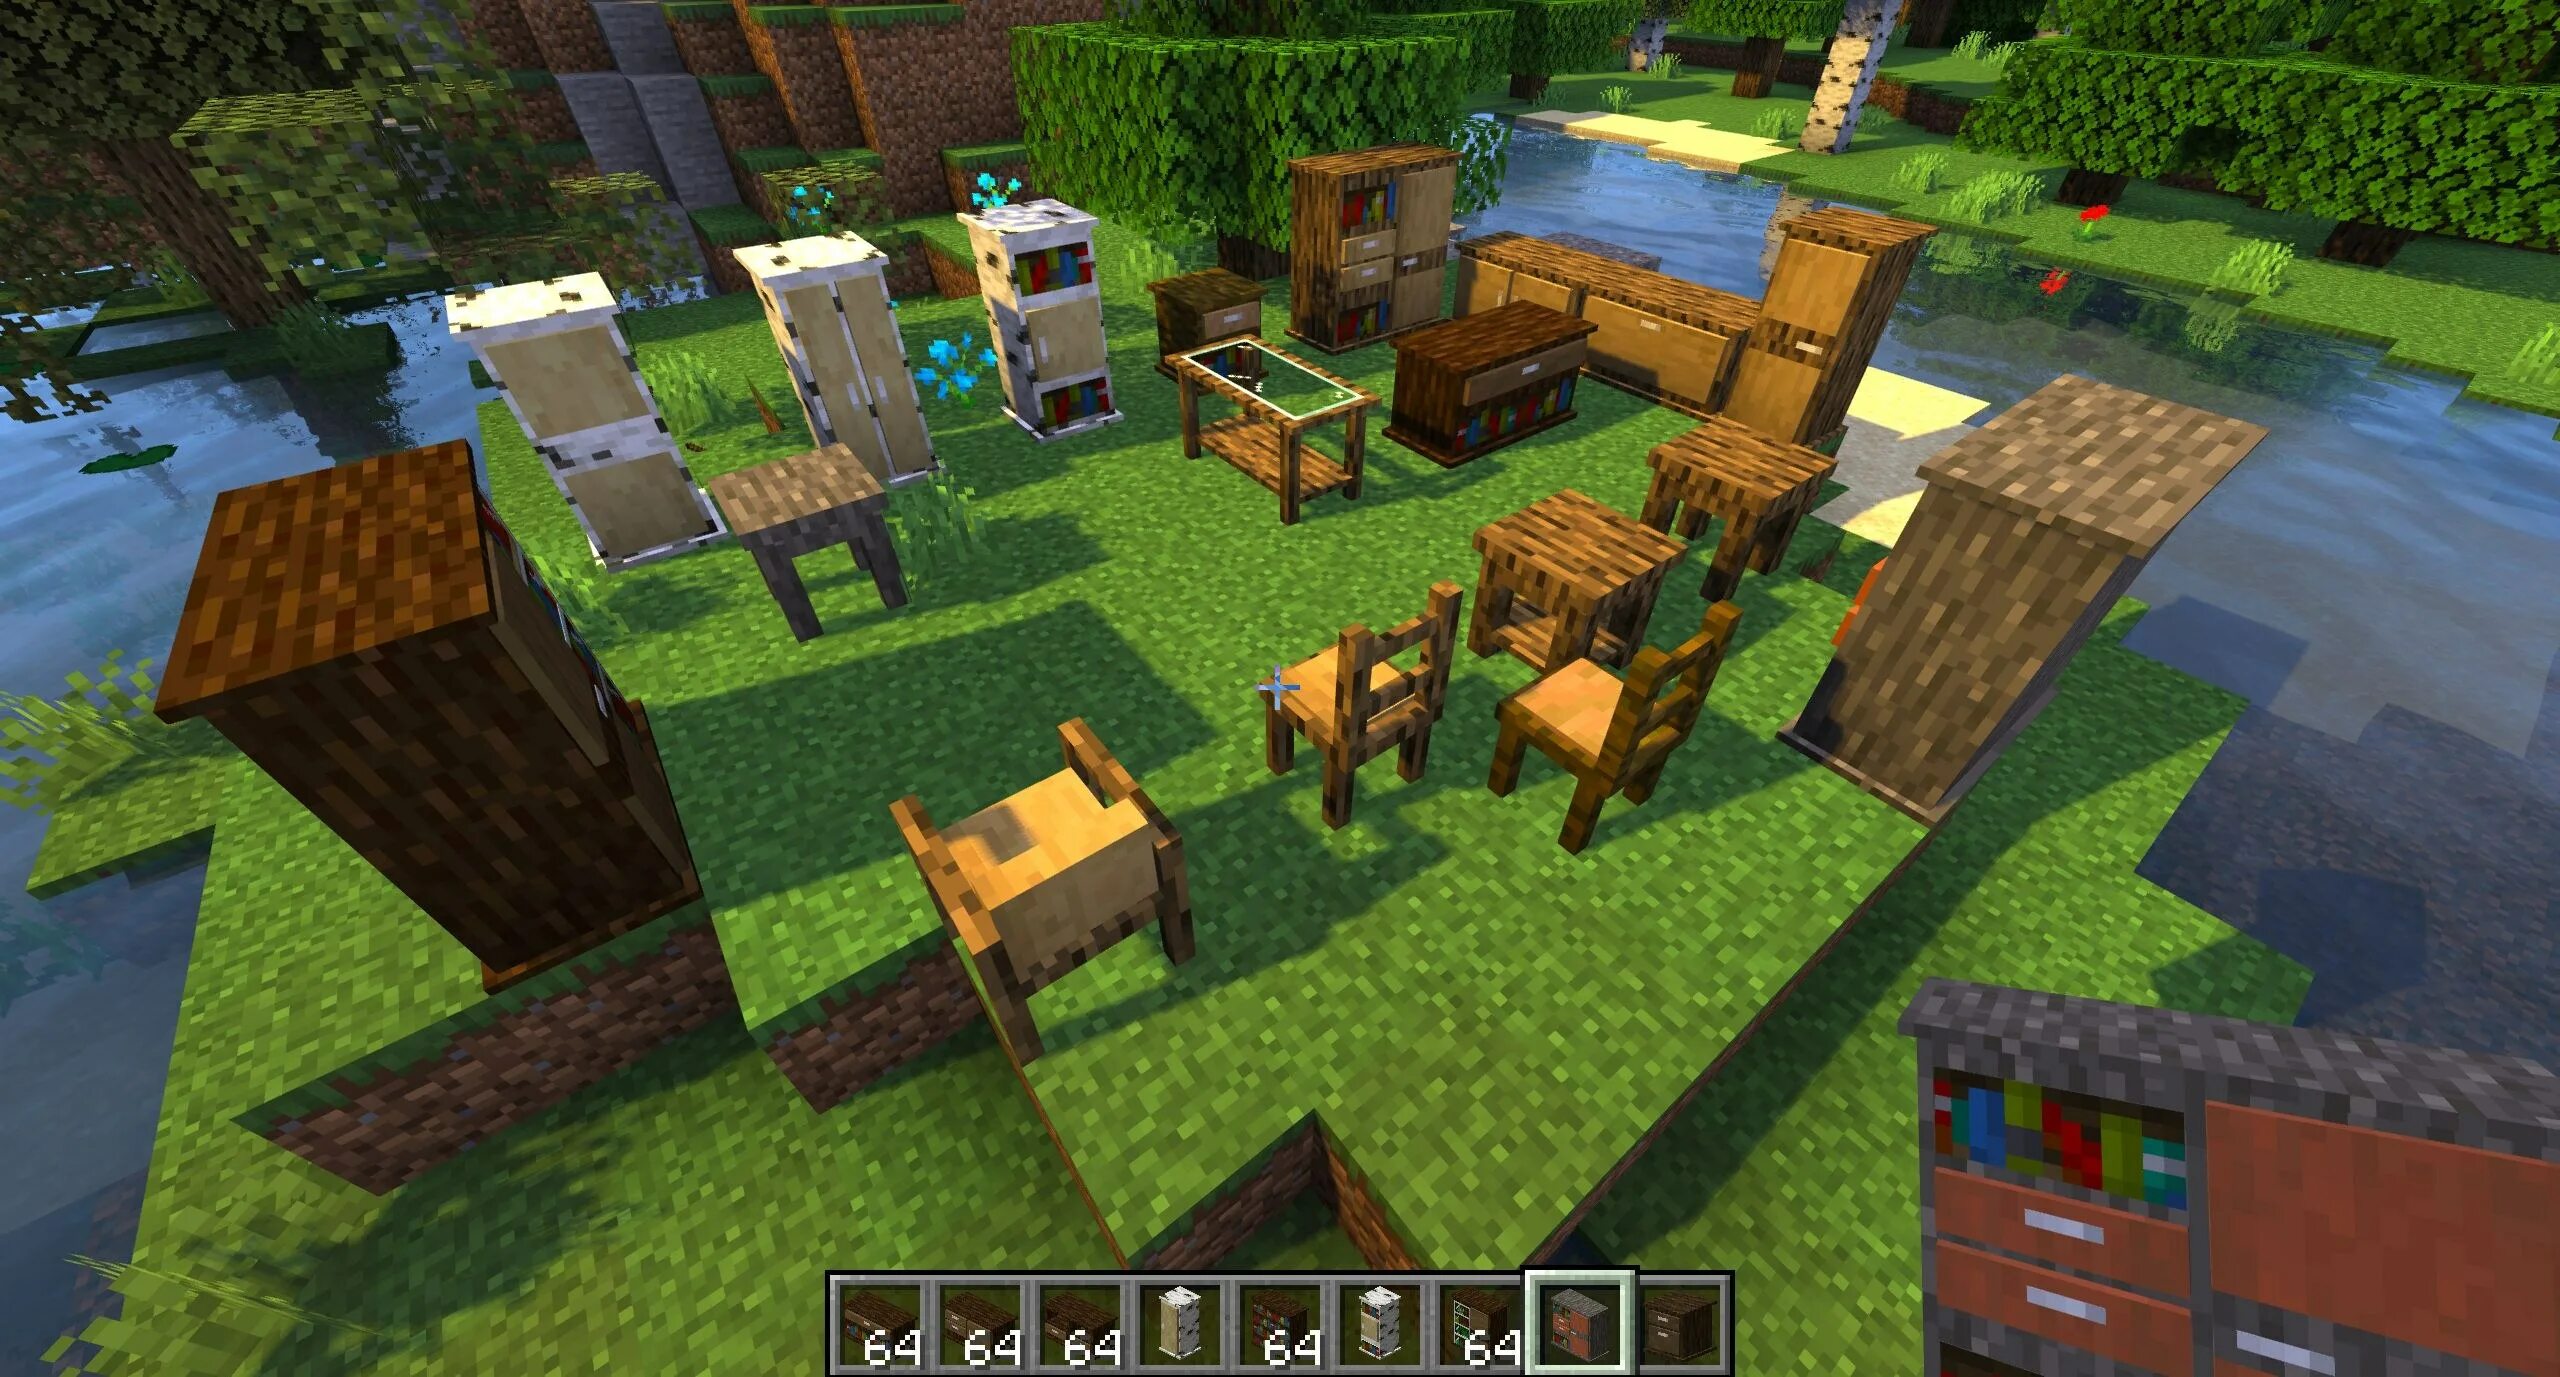 Minecraft 16 версию. Мебель для МАЙНКРАФТА 1.16.5. Мод на мебель 1.16.5. Minecraft 1.12.2 Mod мебель. Decocraft 1.16.5.